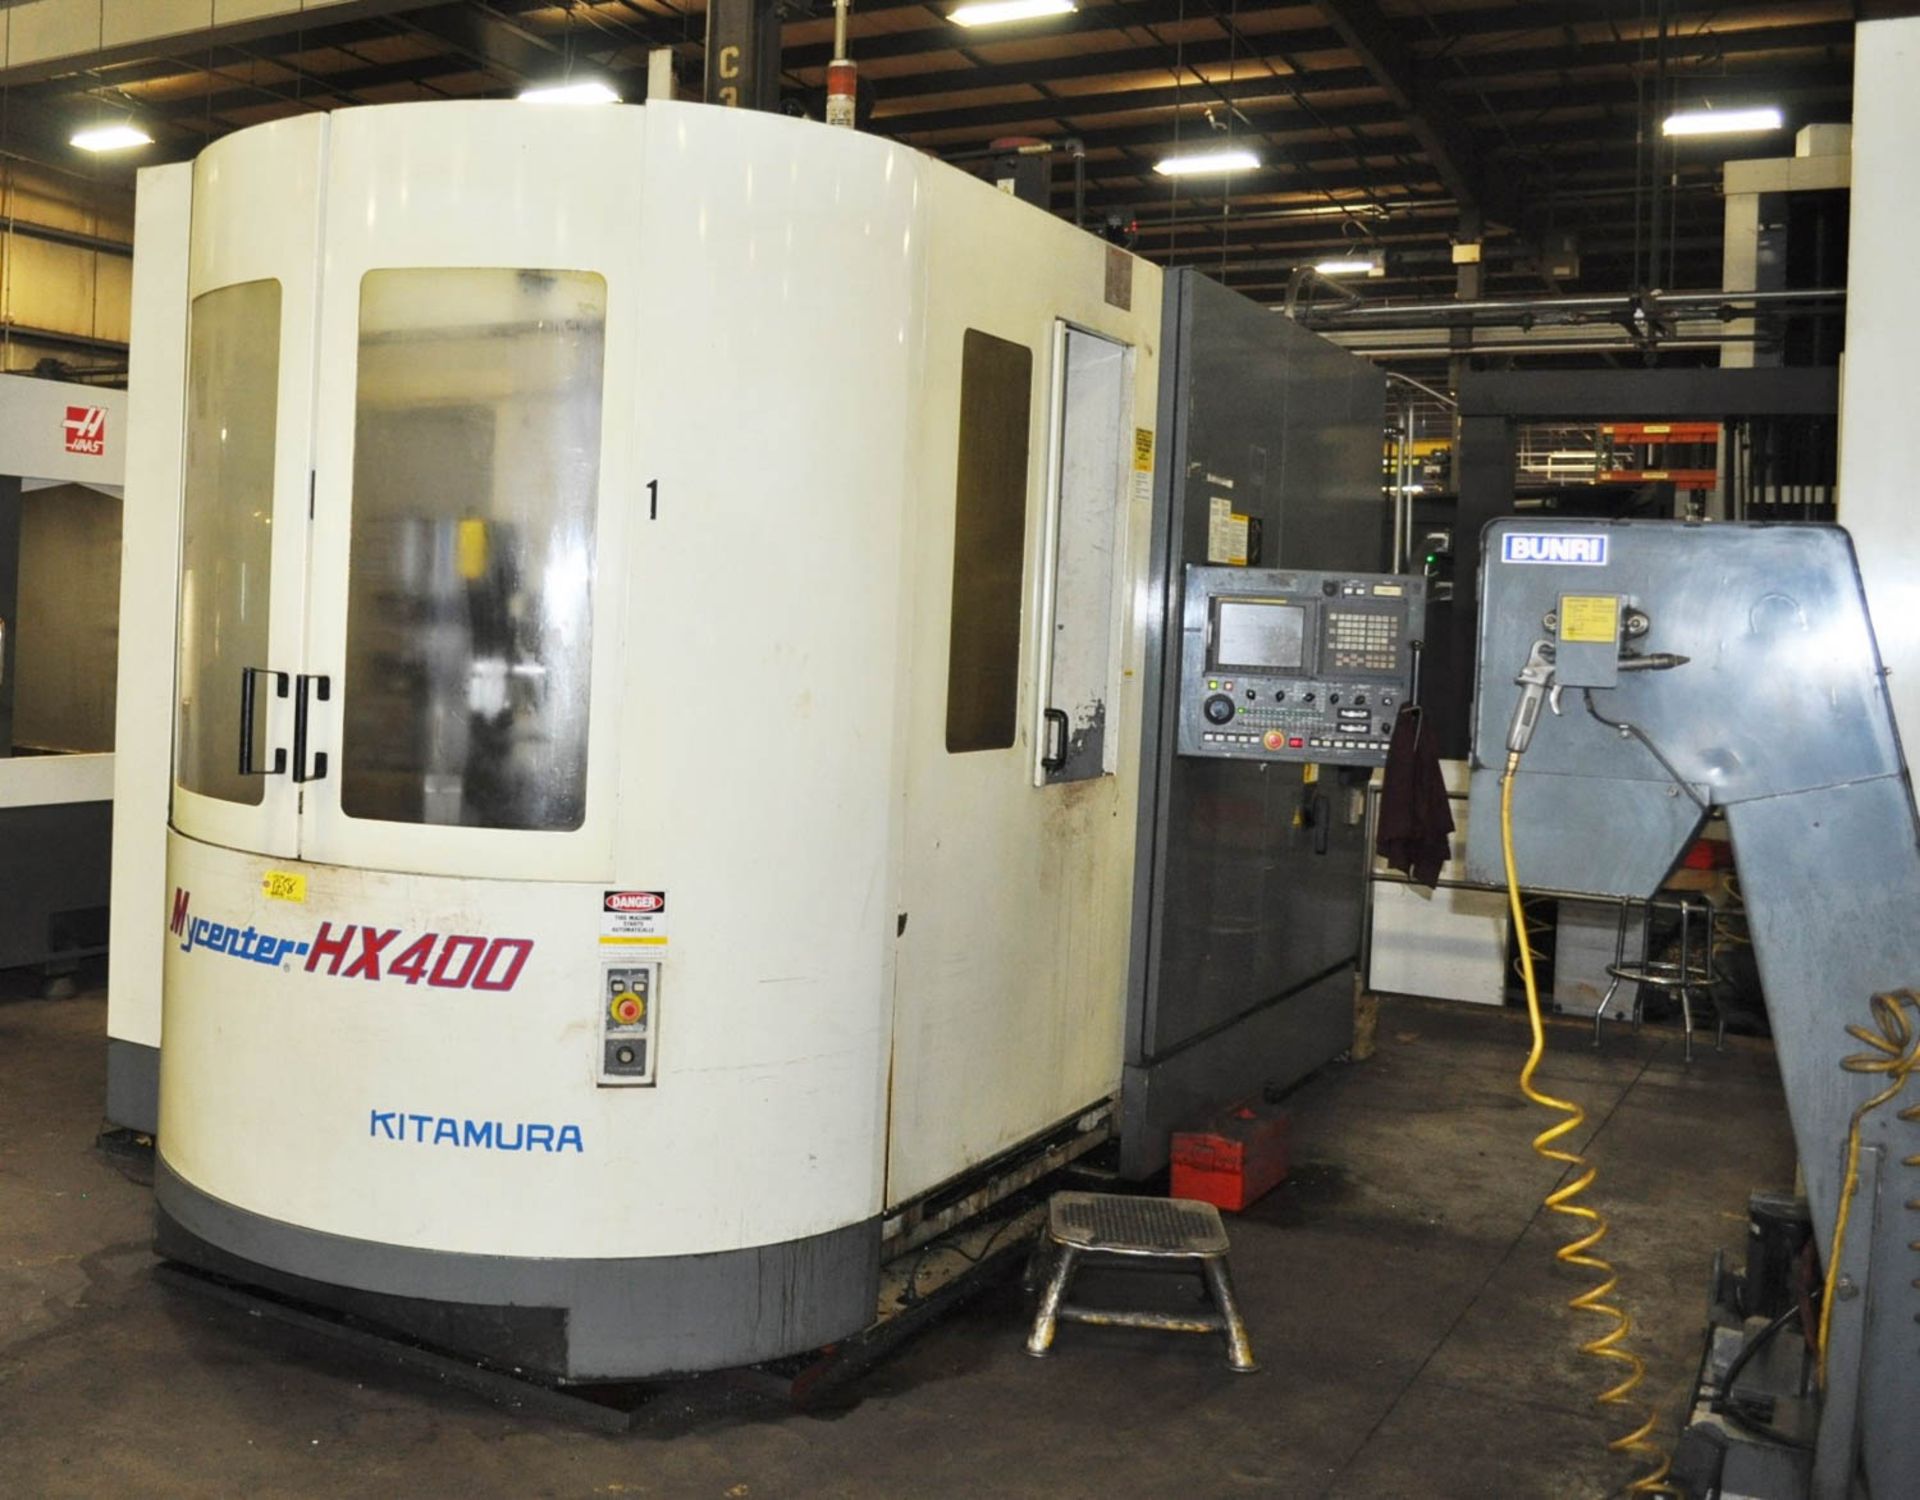 KITAMURA MYCENTER MDL. HX400 CNC HORIZONTAL MACHINING CENTER, WITH FANUC 16iM CNC CONTROL, - Image 2 of 8